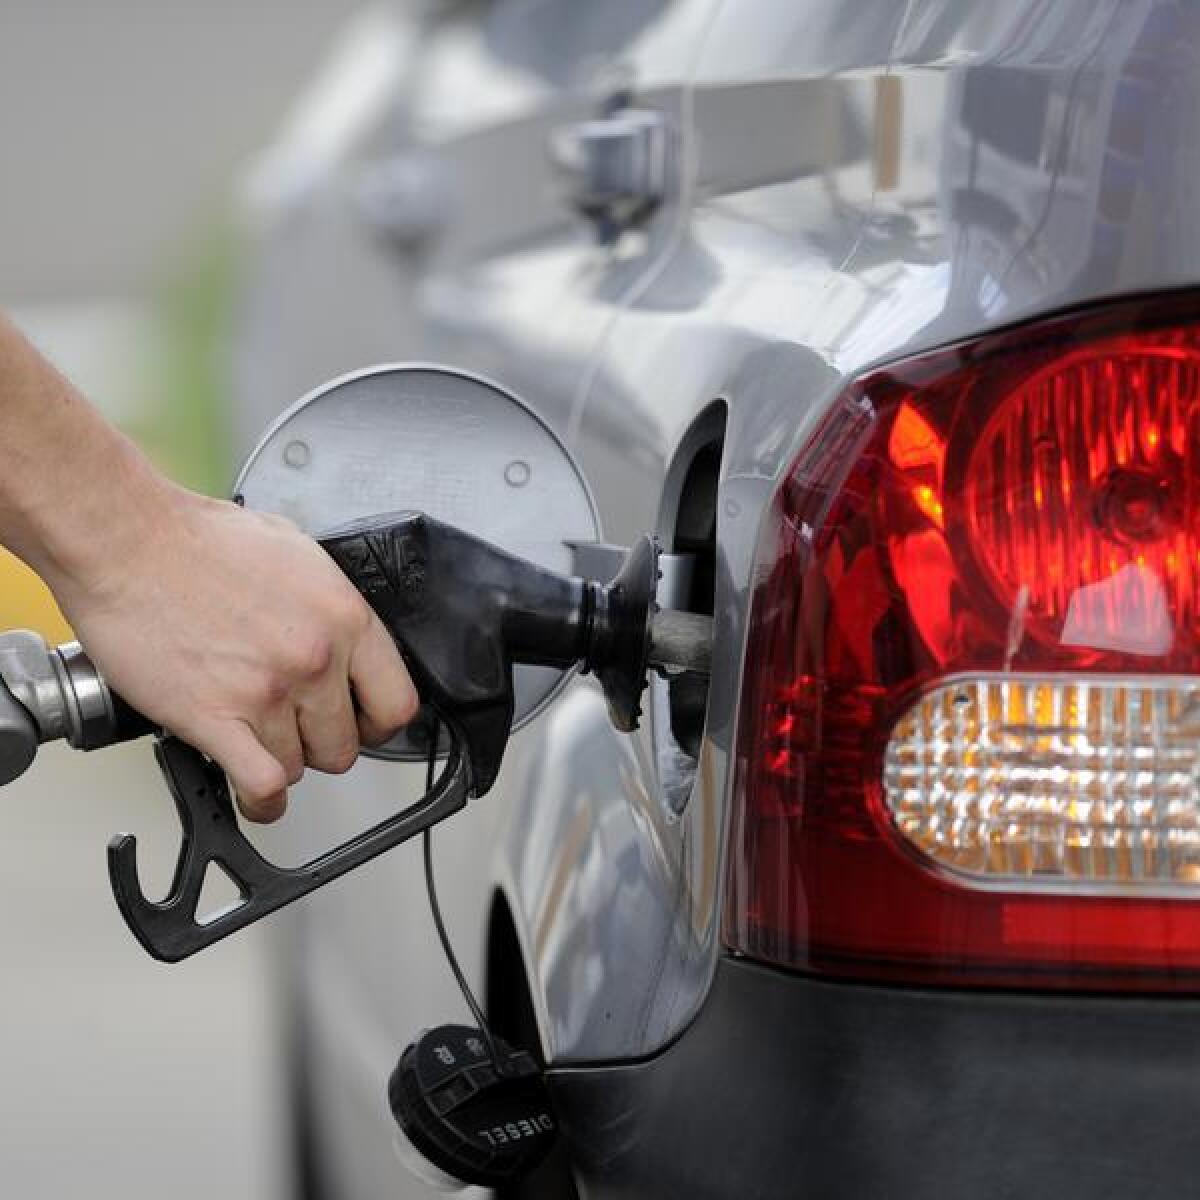 A man pumps petrol at a service station (file image)